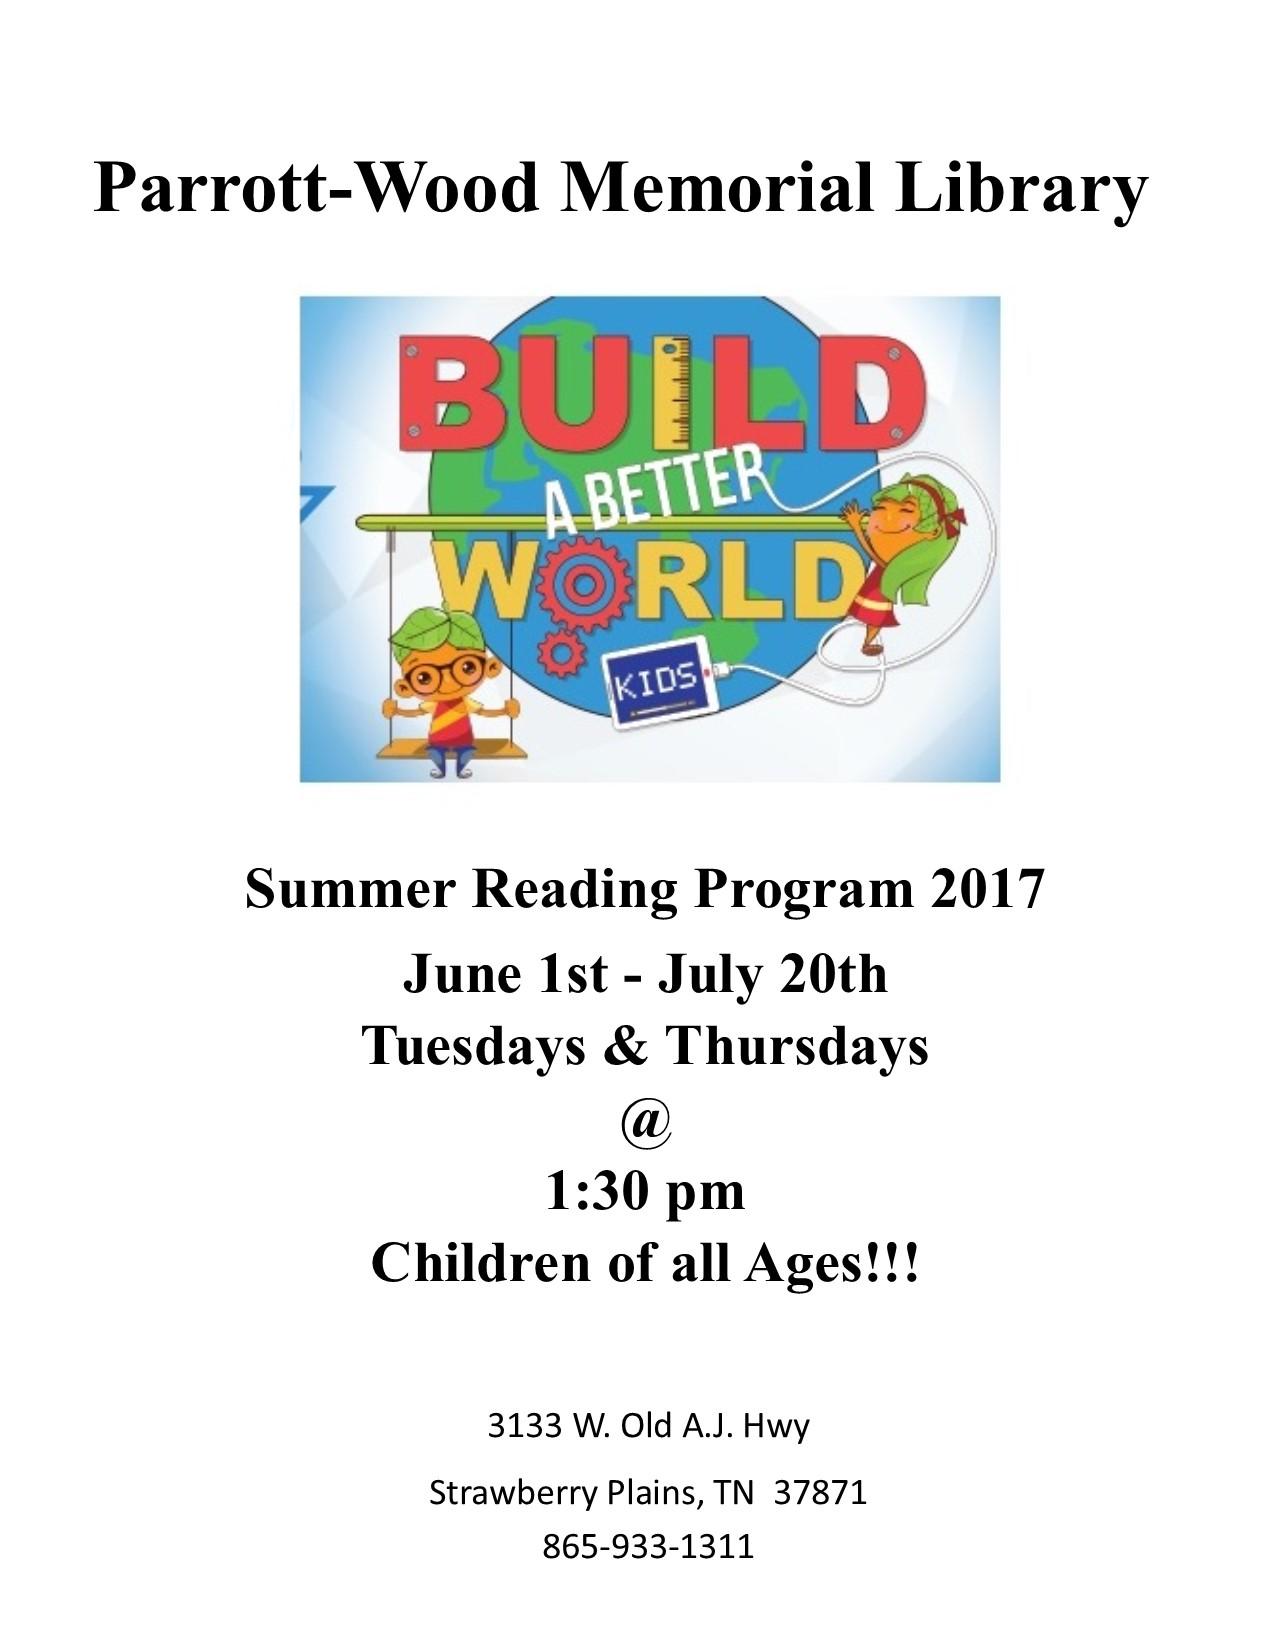 Building a Better World Summer Reading Program